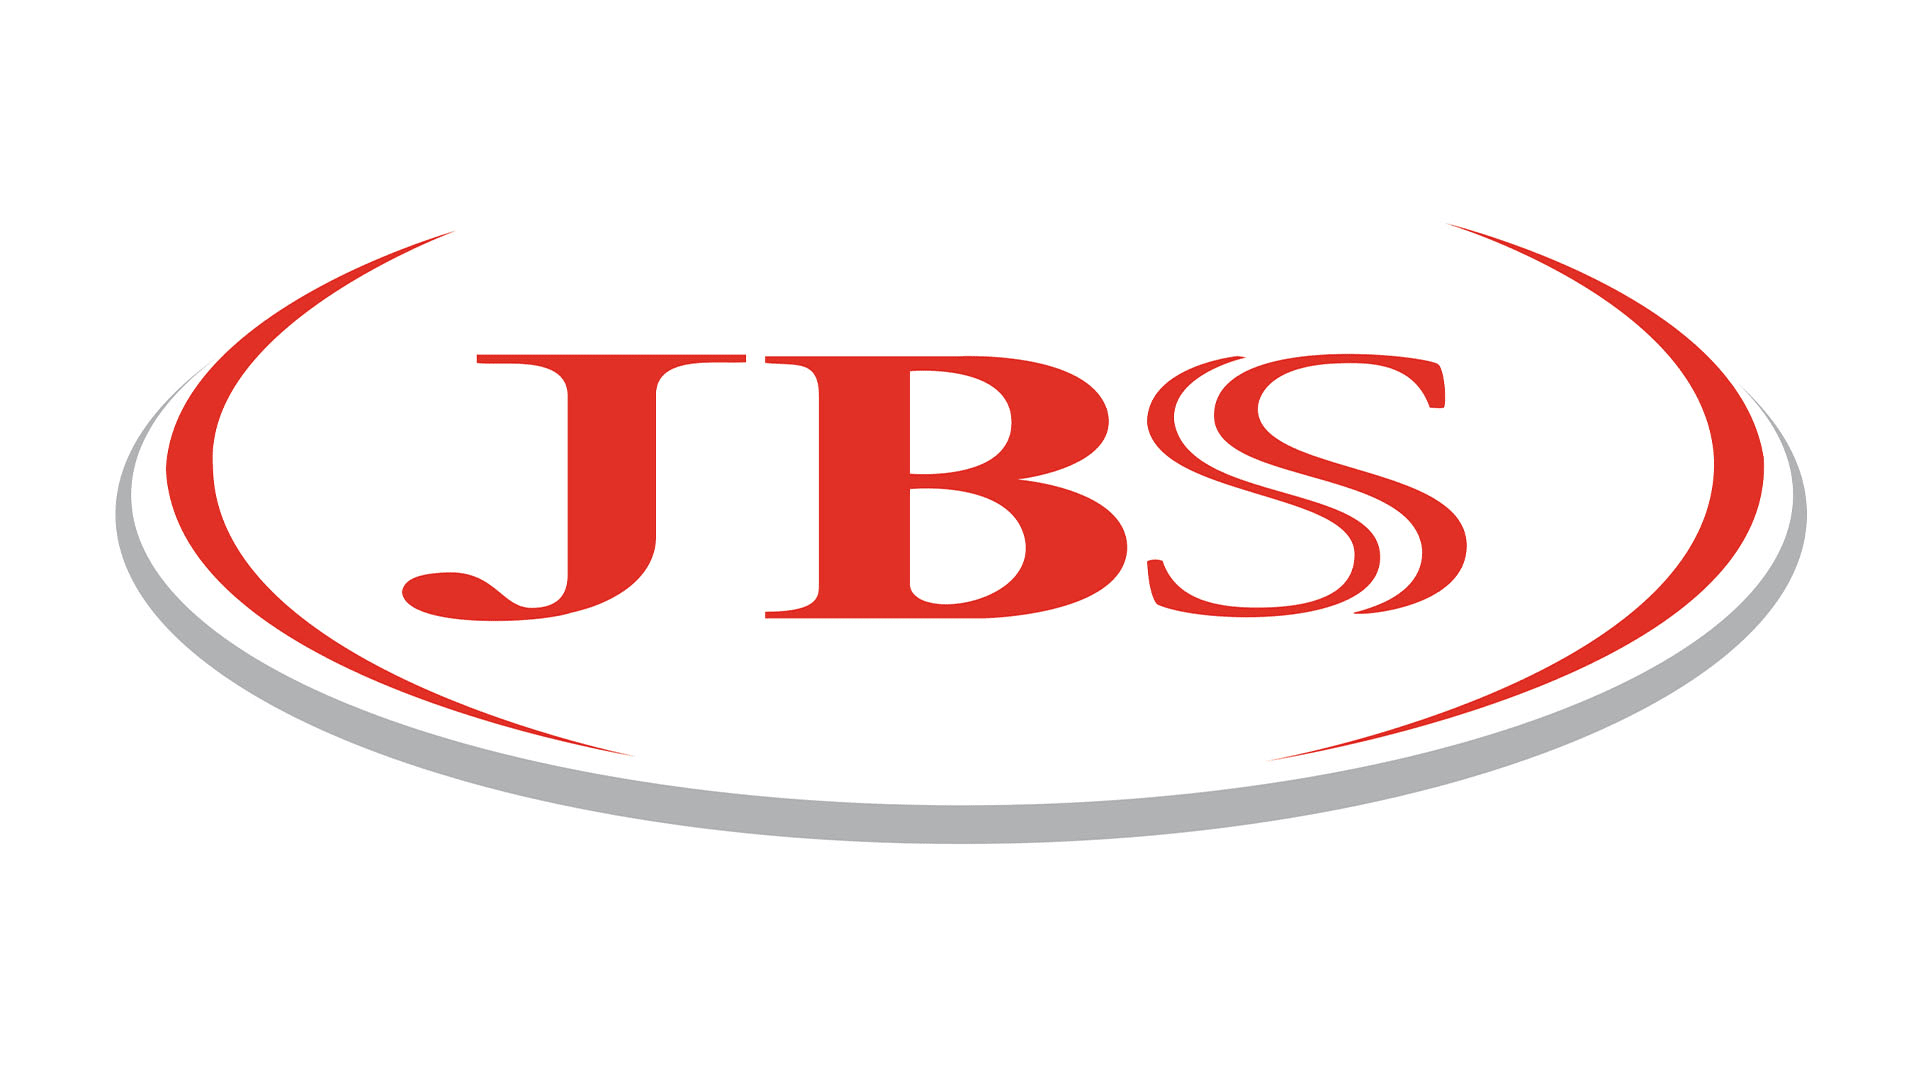 jbs logo